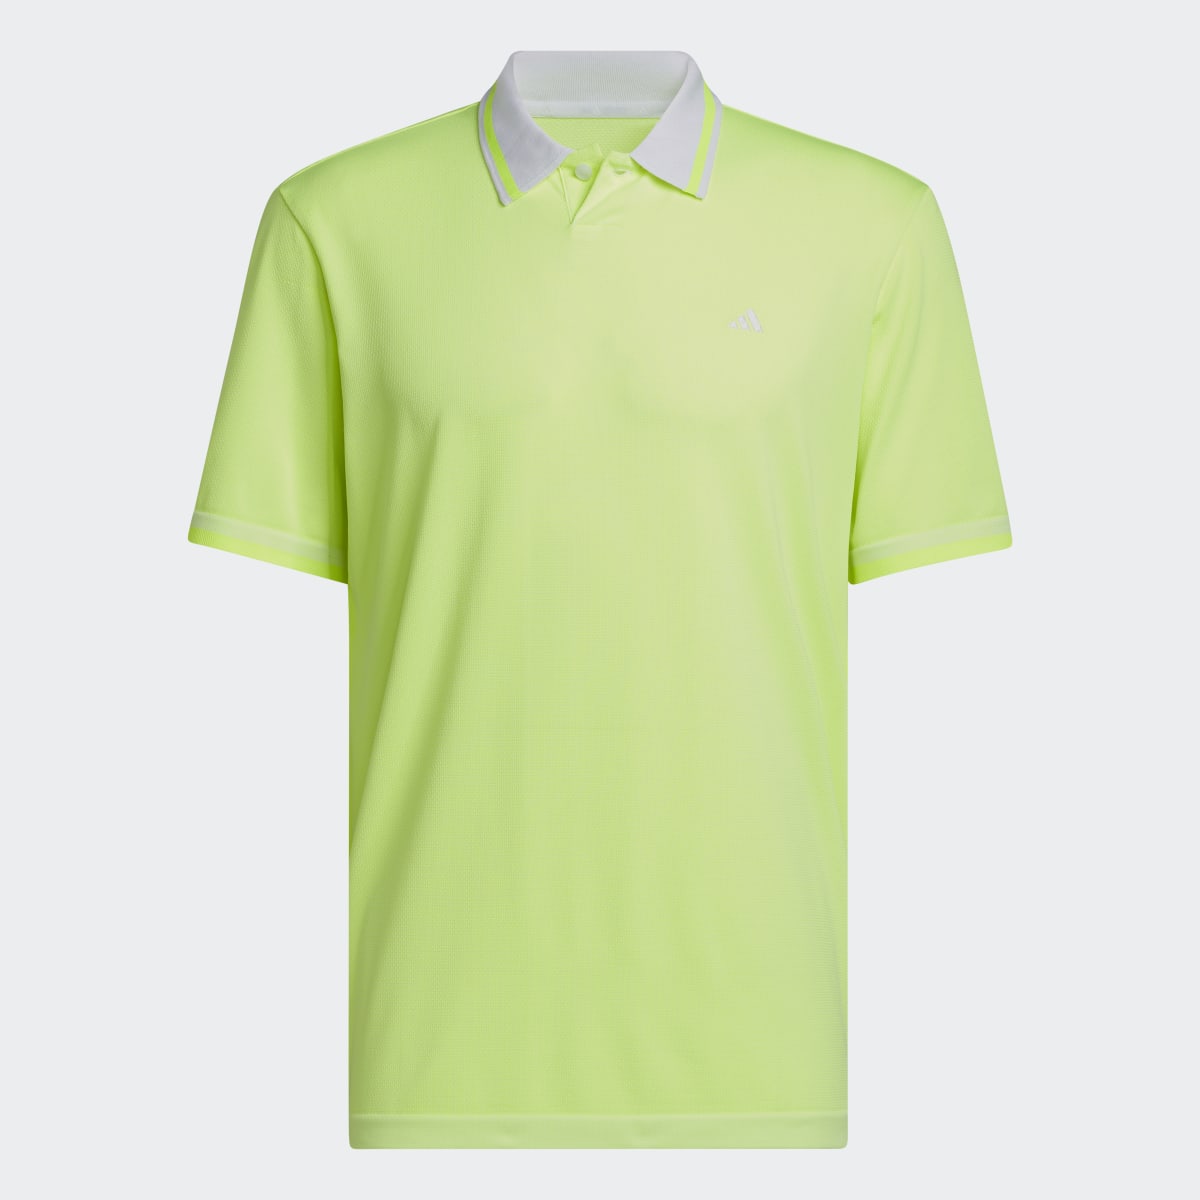 Adidas Ultimate365 Tour PRIMEKNIT Golf Polo Shirt. 7